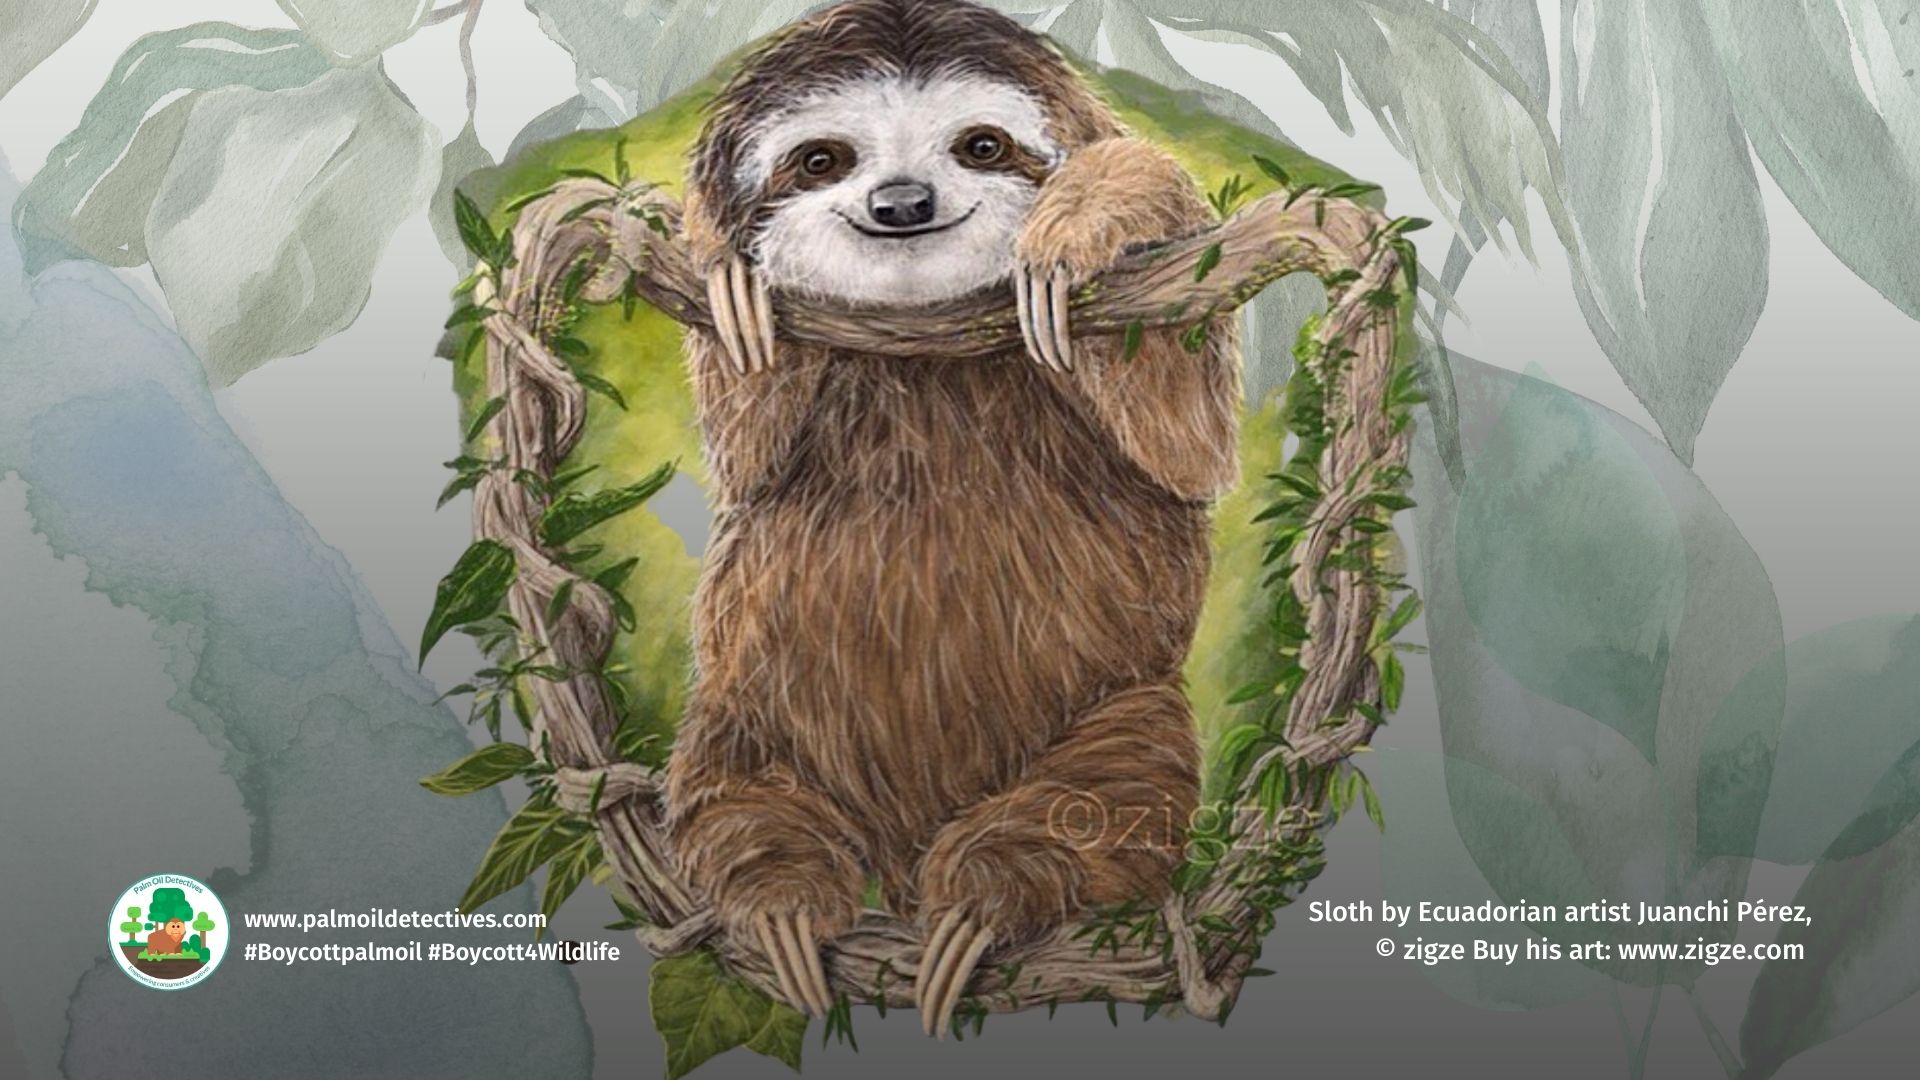 Sloth by Ecuadorian artist Juanchi Pérez